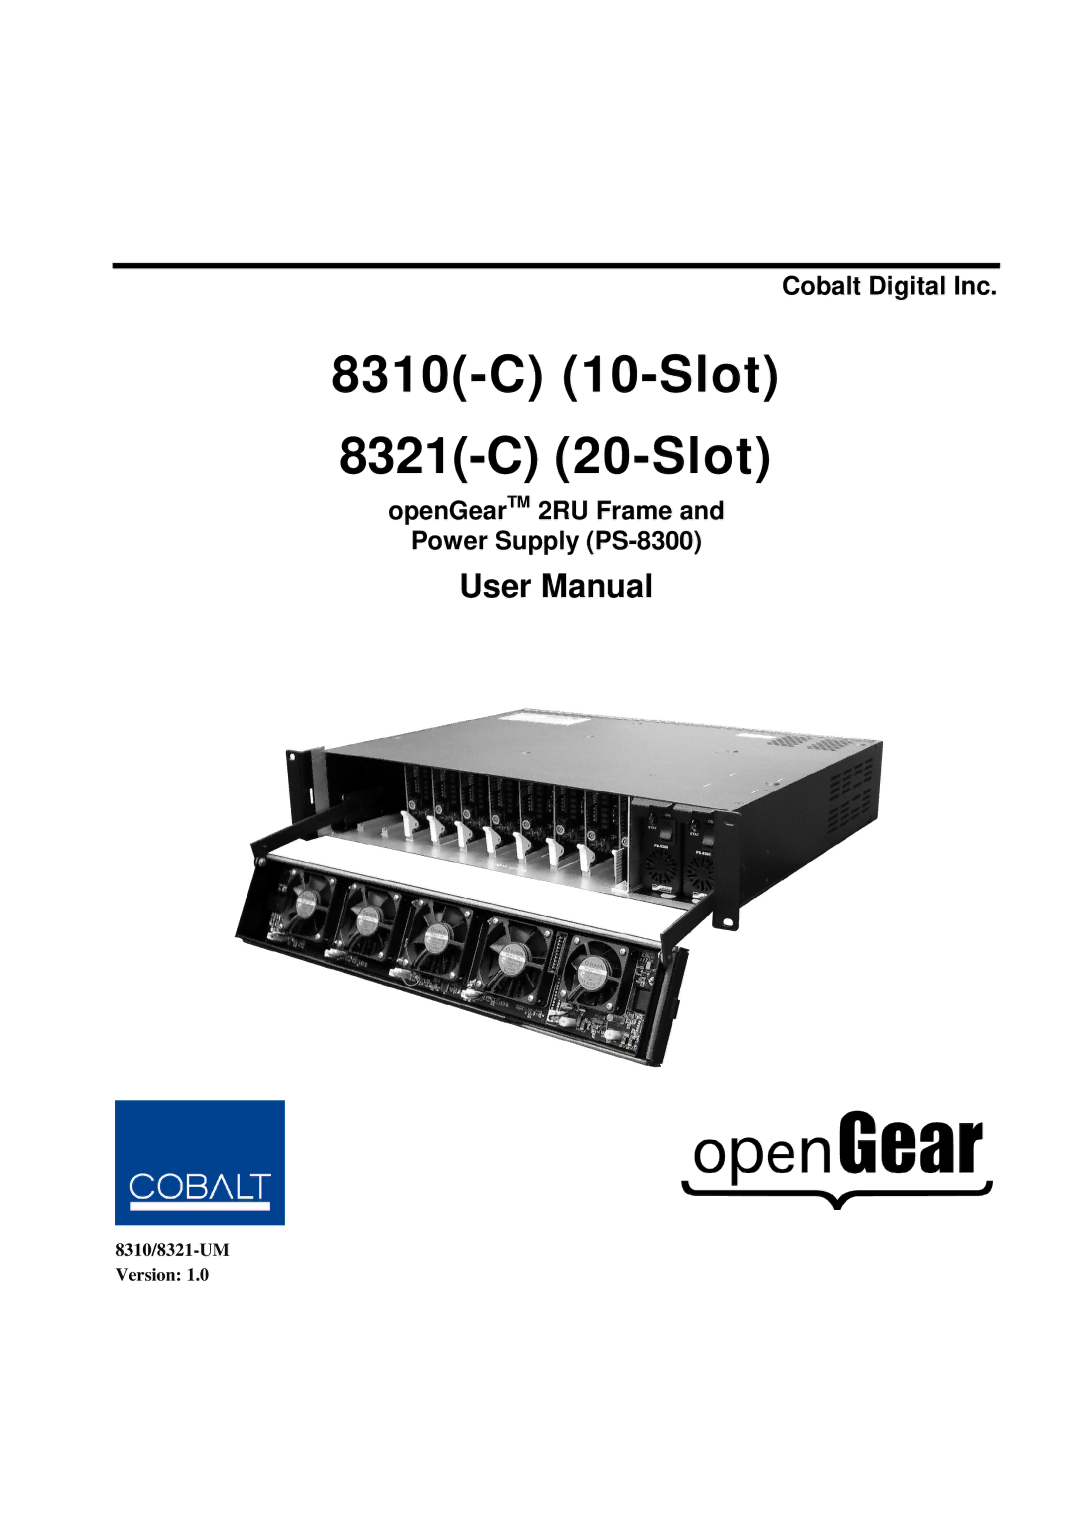 Cobalt Networks 8321(-C), 8310(-C) user manual Cobalt Digital Inc, OpenGearTM 2RU Frame Power Supply PS-8300 